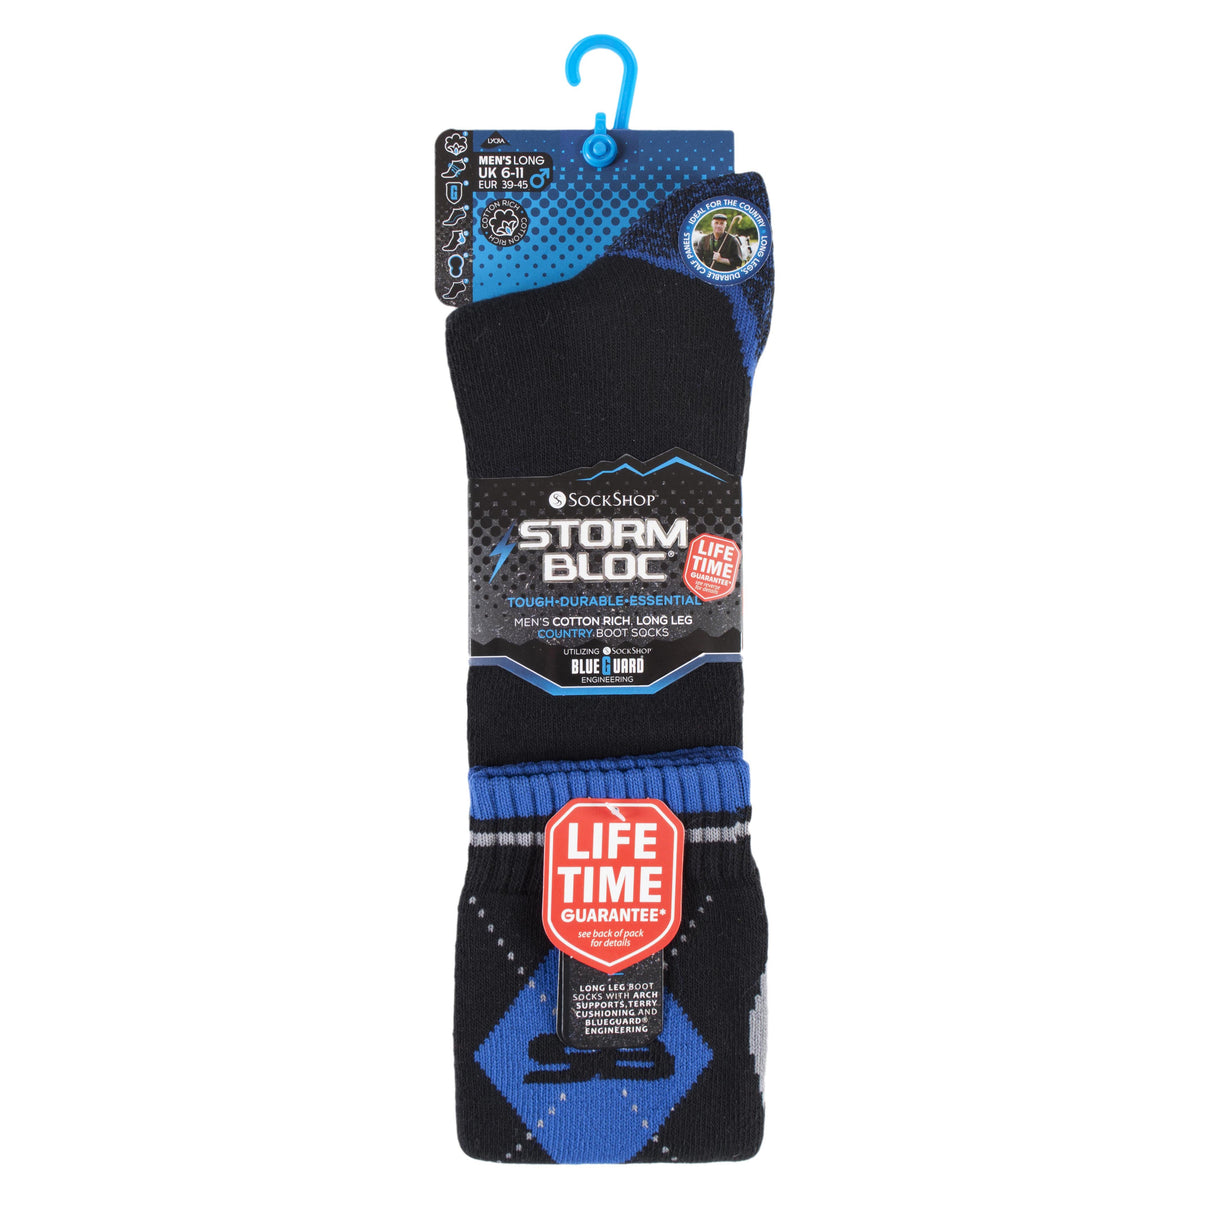 Storm Bloc Herre Life Time Garanti Socks Twin Pack